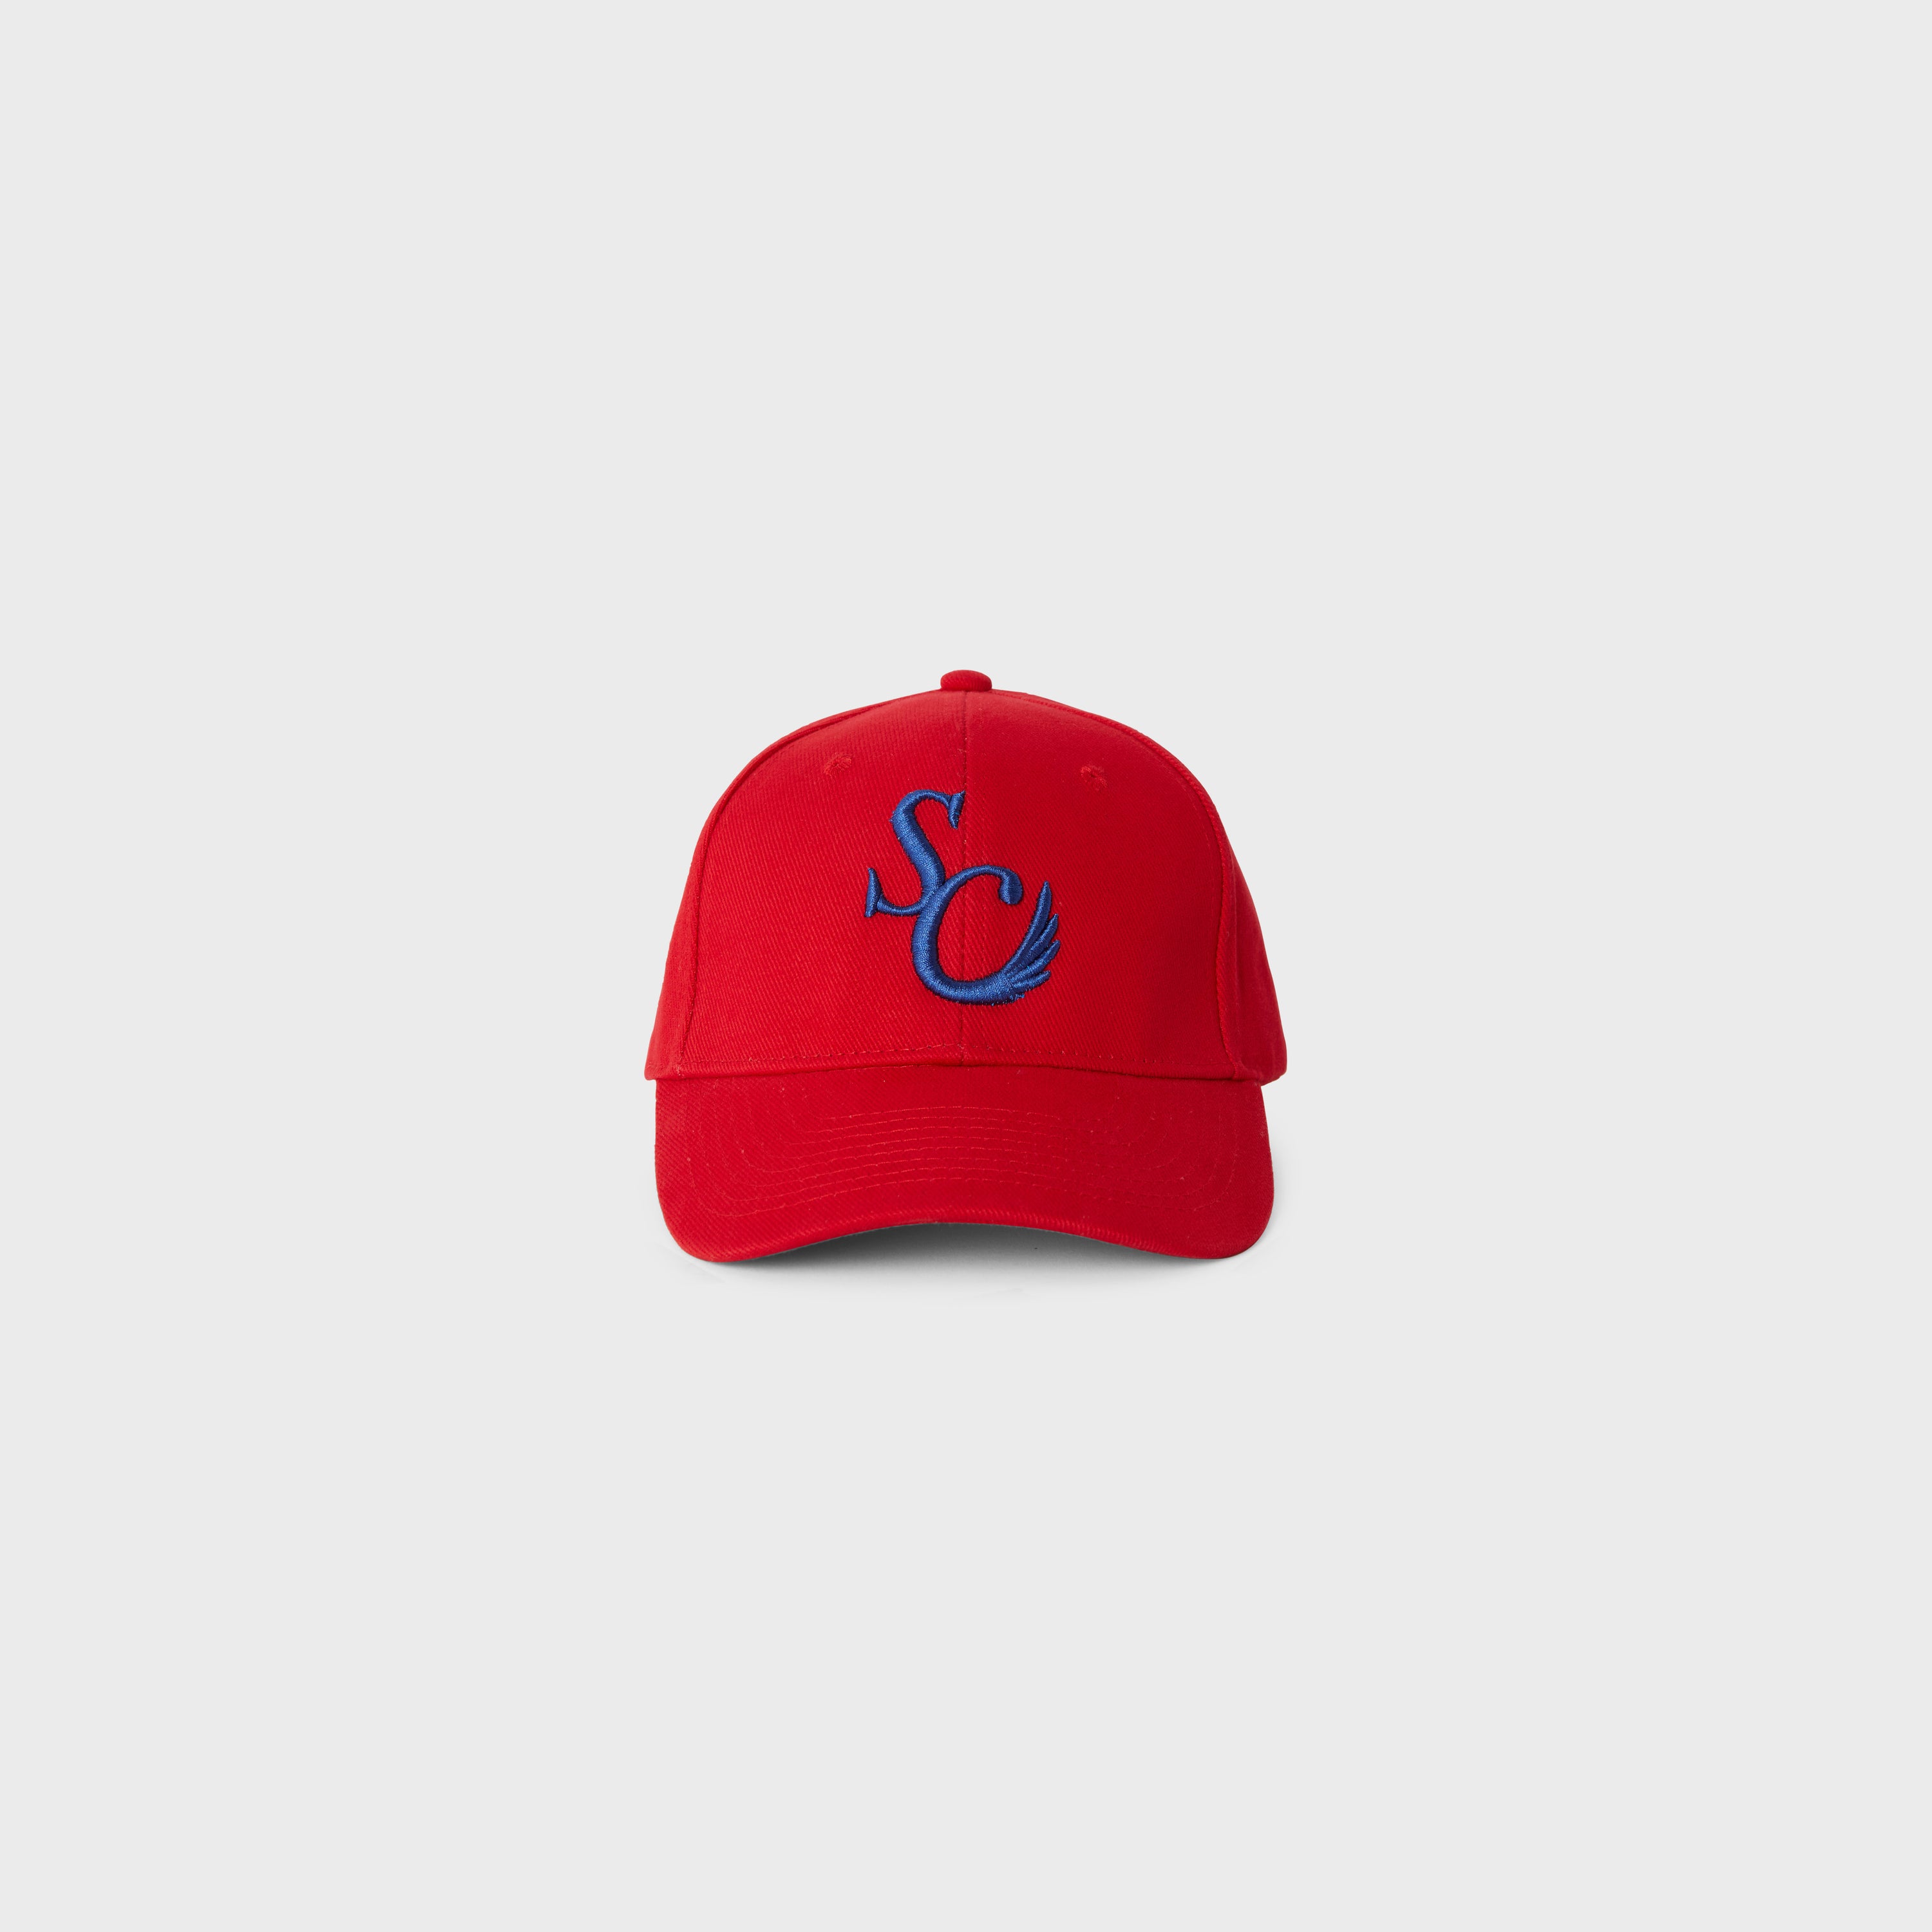 Wing Logo Baseball Cap in Red Cotton